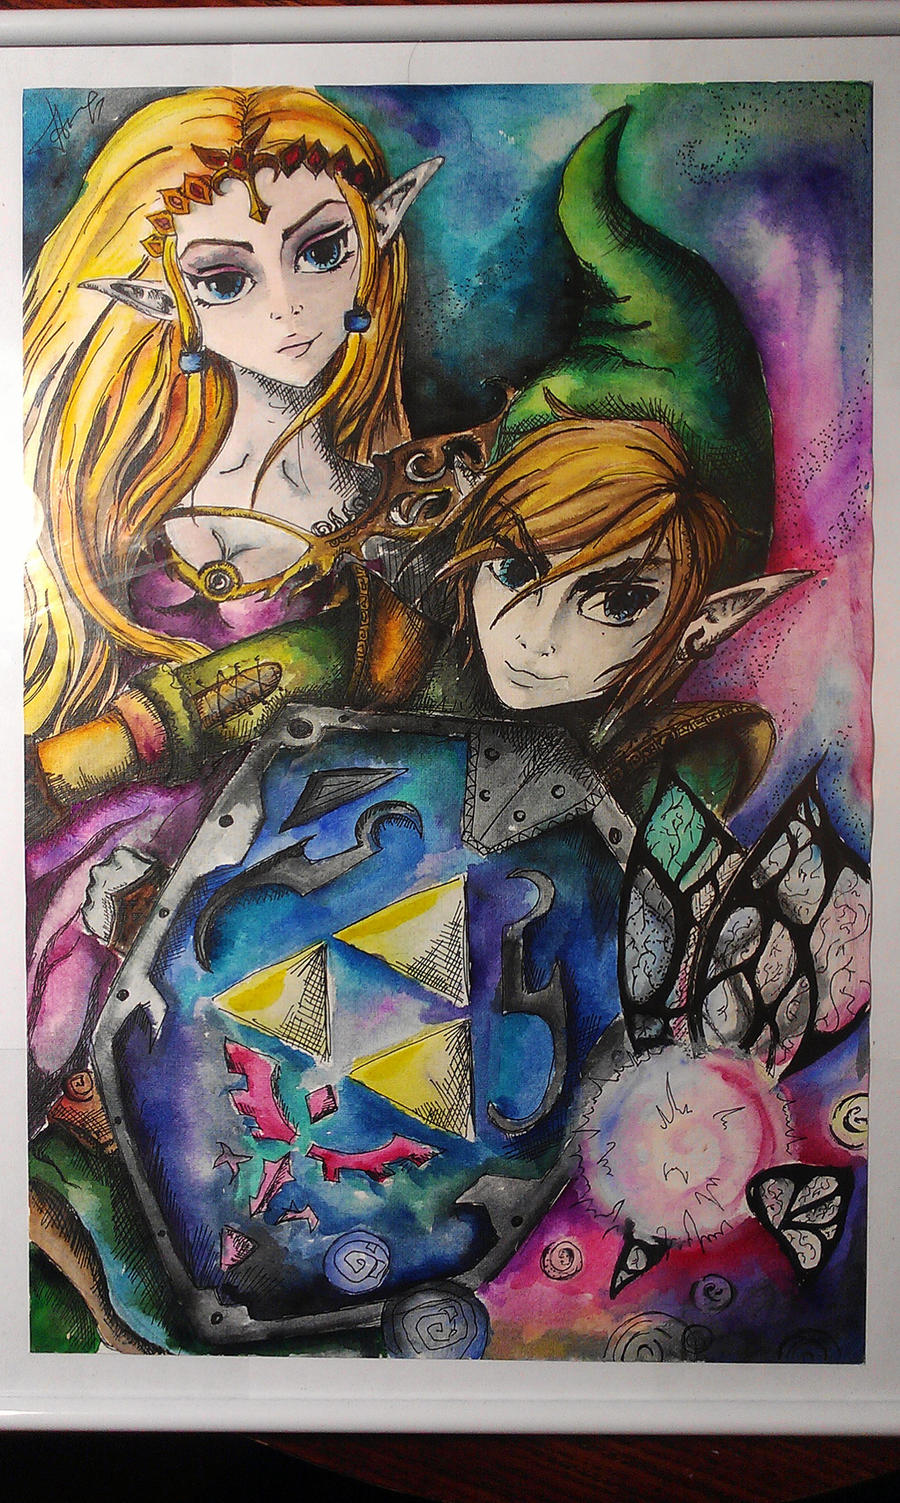 Link and Zelda - Ocarina of Time by GENZOMAN on DeviantArt